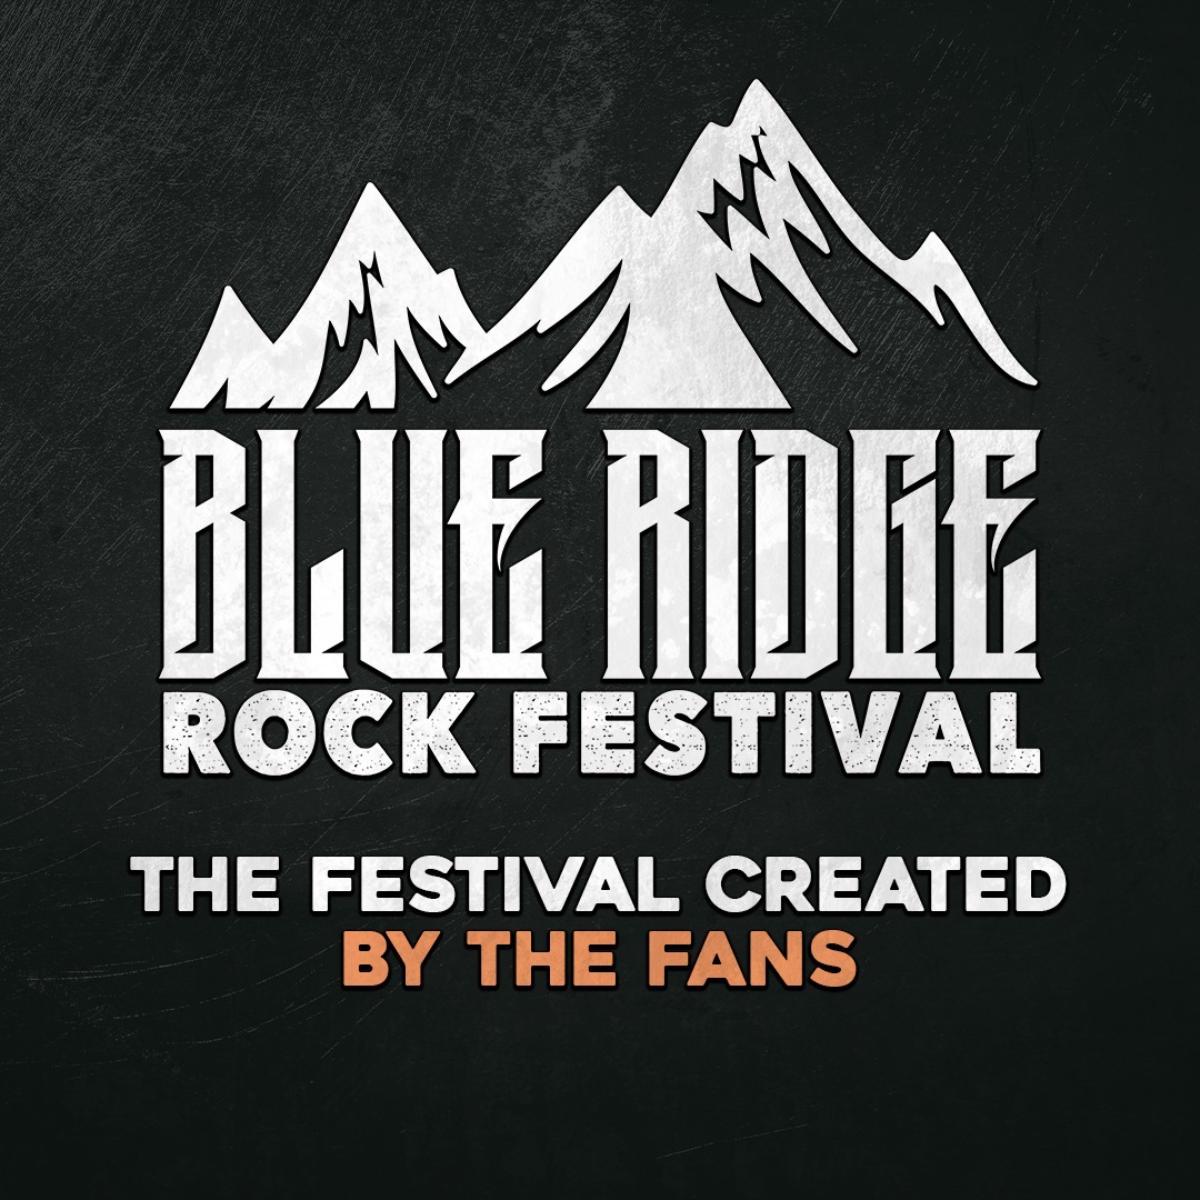 Blue Ridge Rock Festival Festival Lineup, Dates and Location